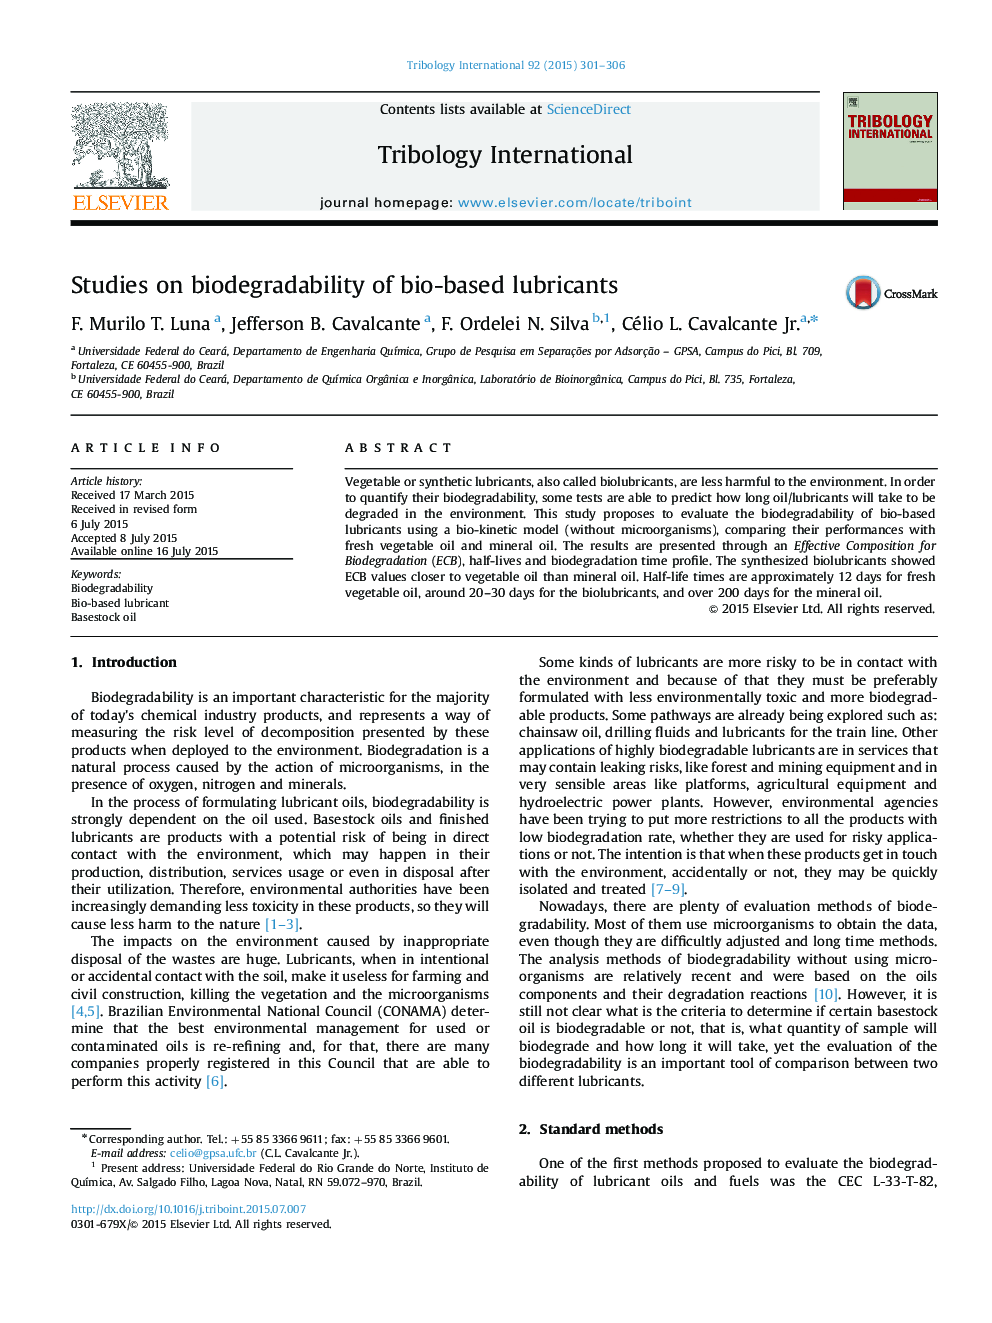 Studies on biodegradability of bio-based lubricants